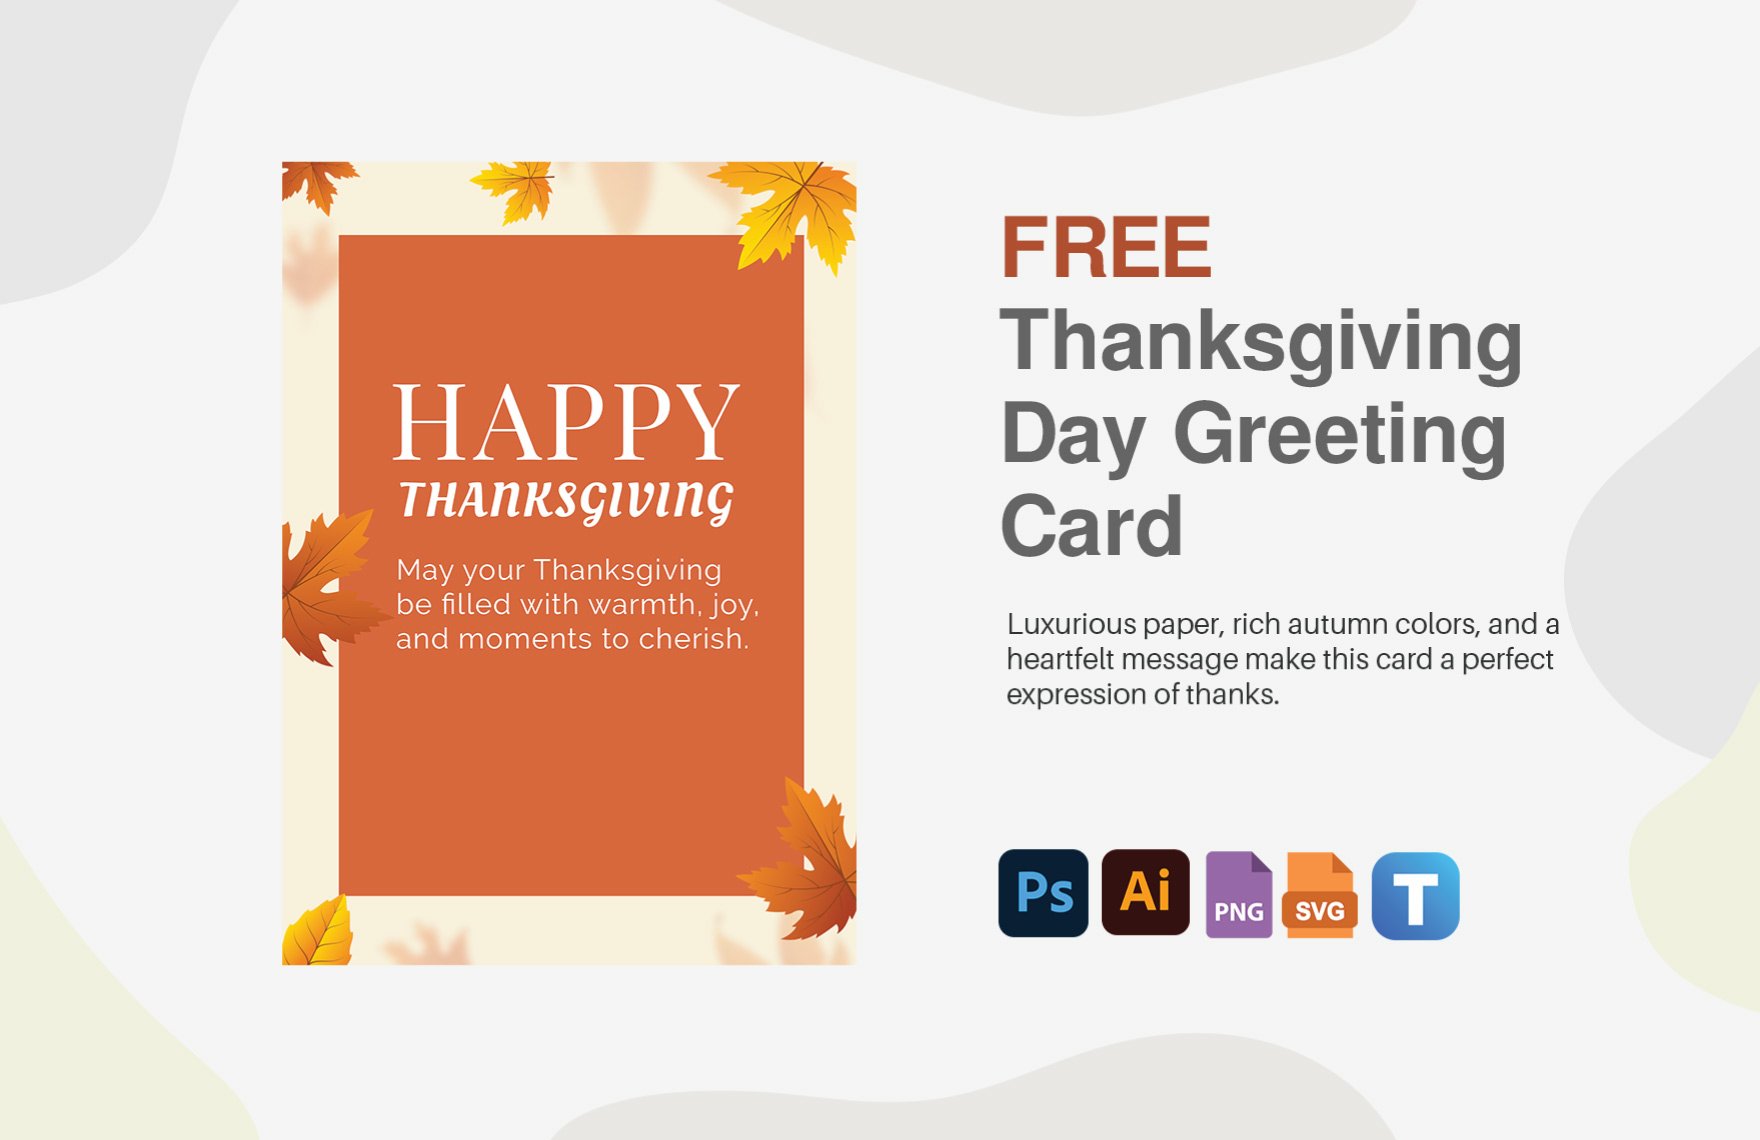 Free Thanksgiving Day Greeting Card in PDF, Illustrator, PSD, SVG, PNG